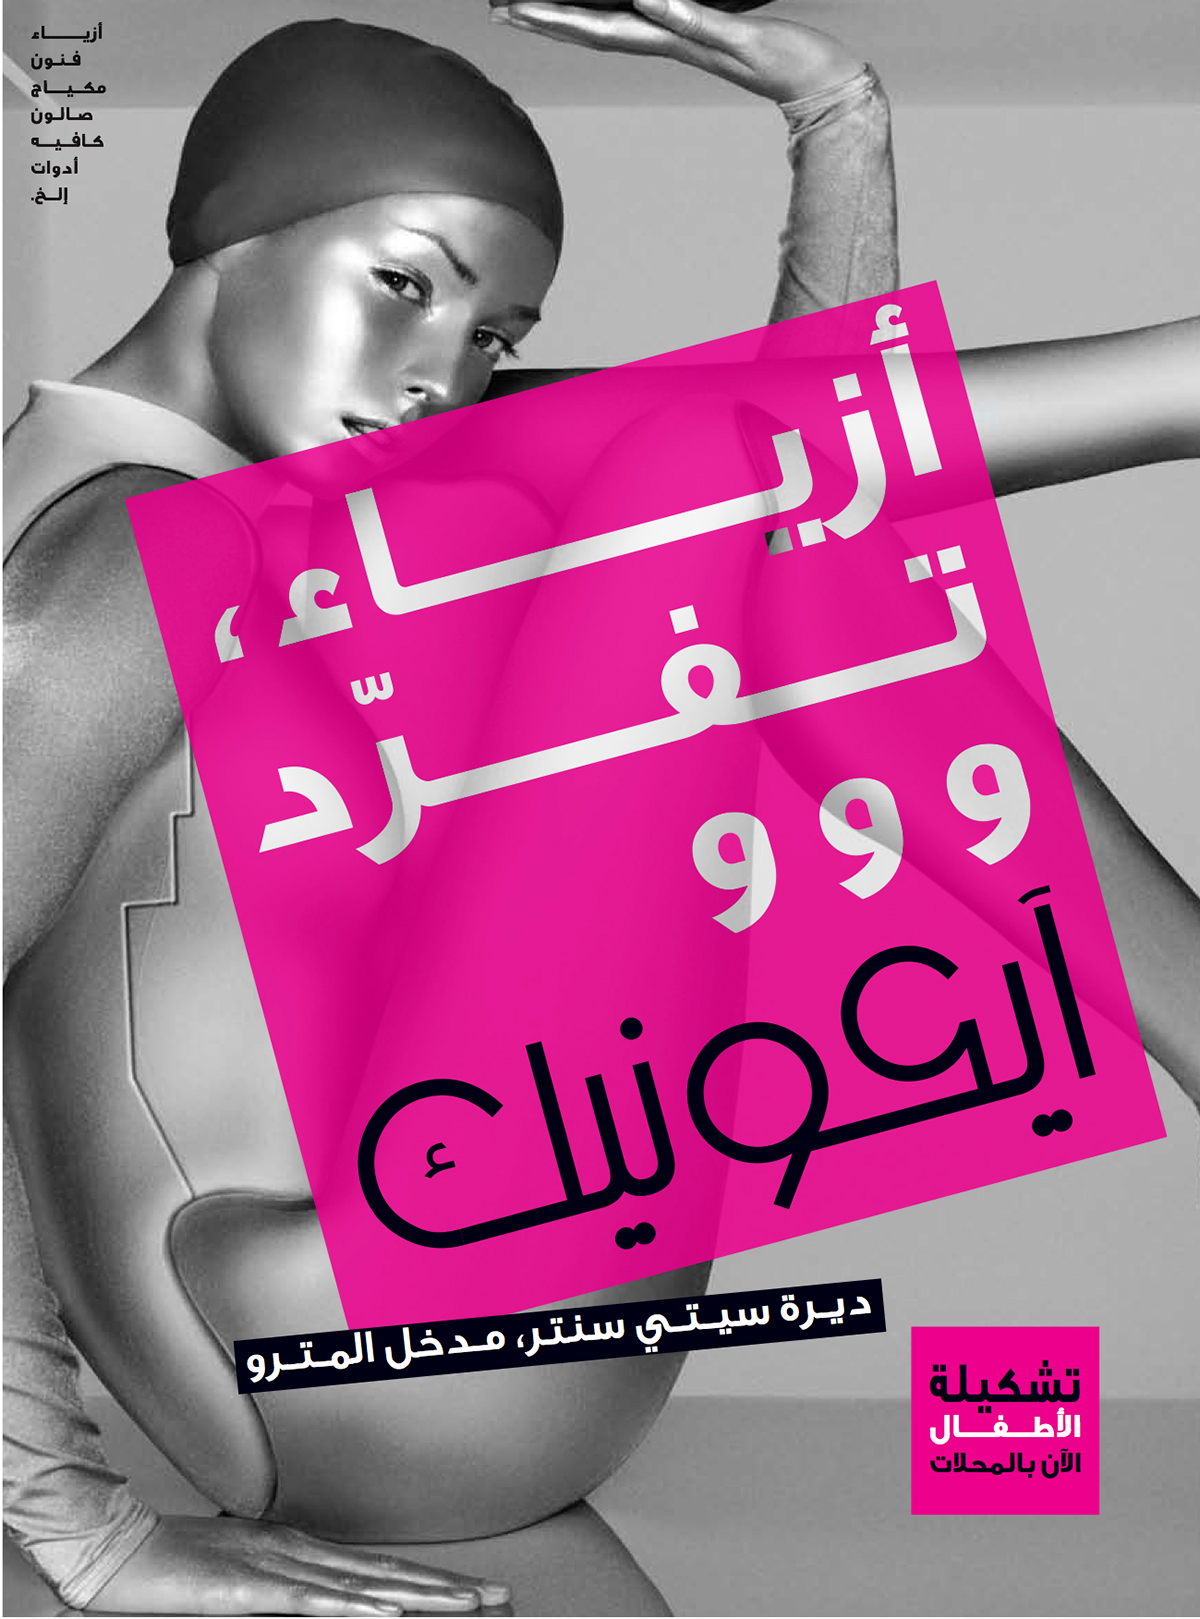 doart dududesign duaa abzeed abazeed fashion advertising MAX splash showmart iconic okaidi obaiby arabic arabization